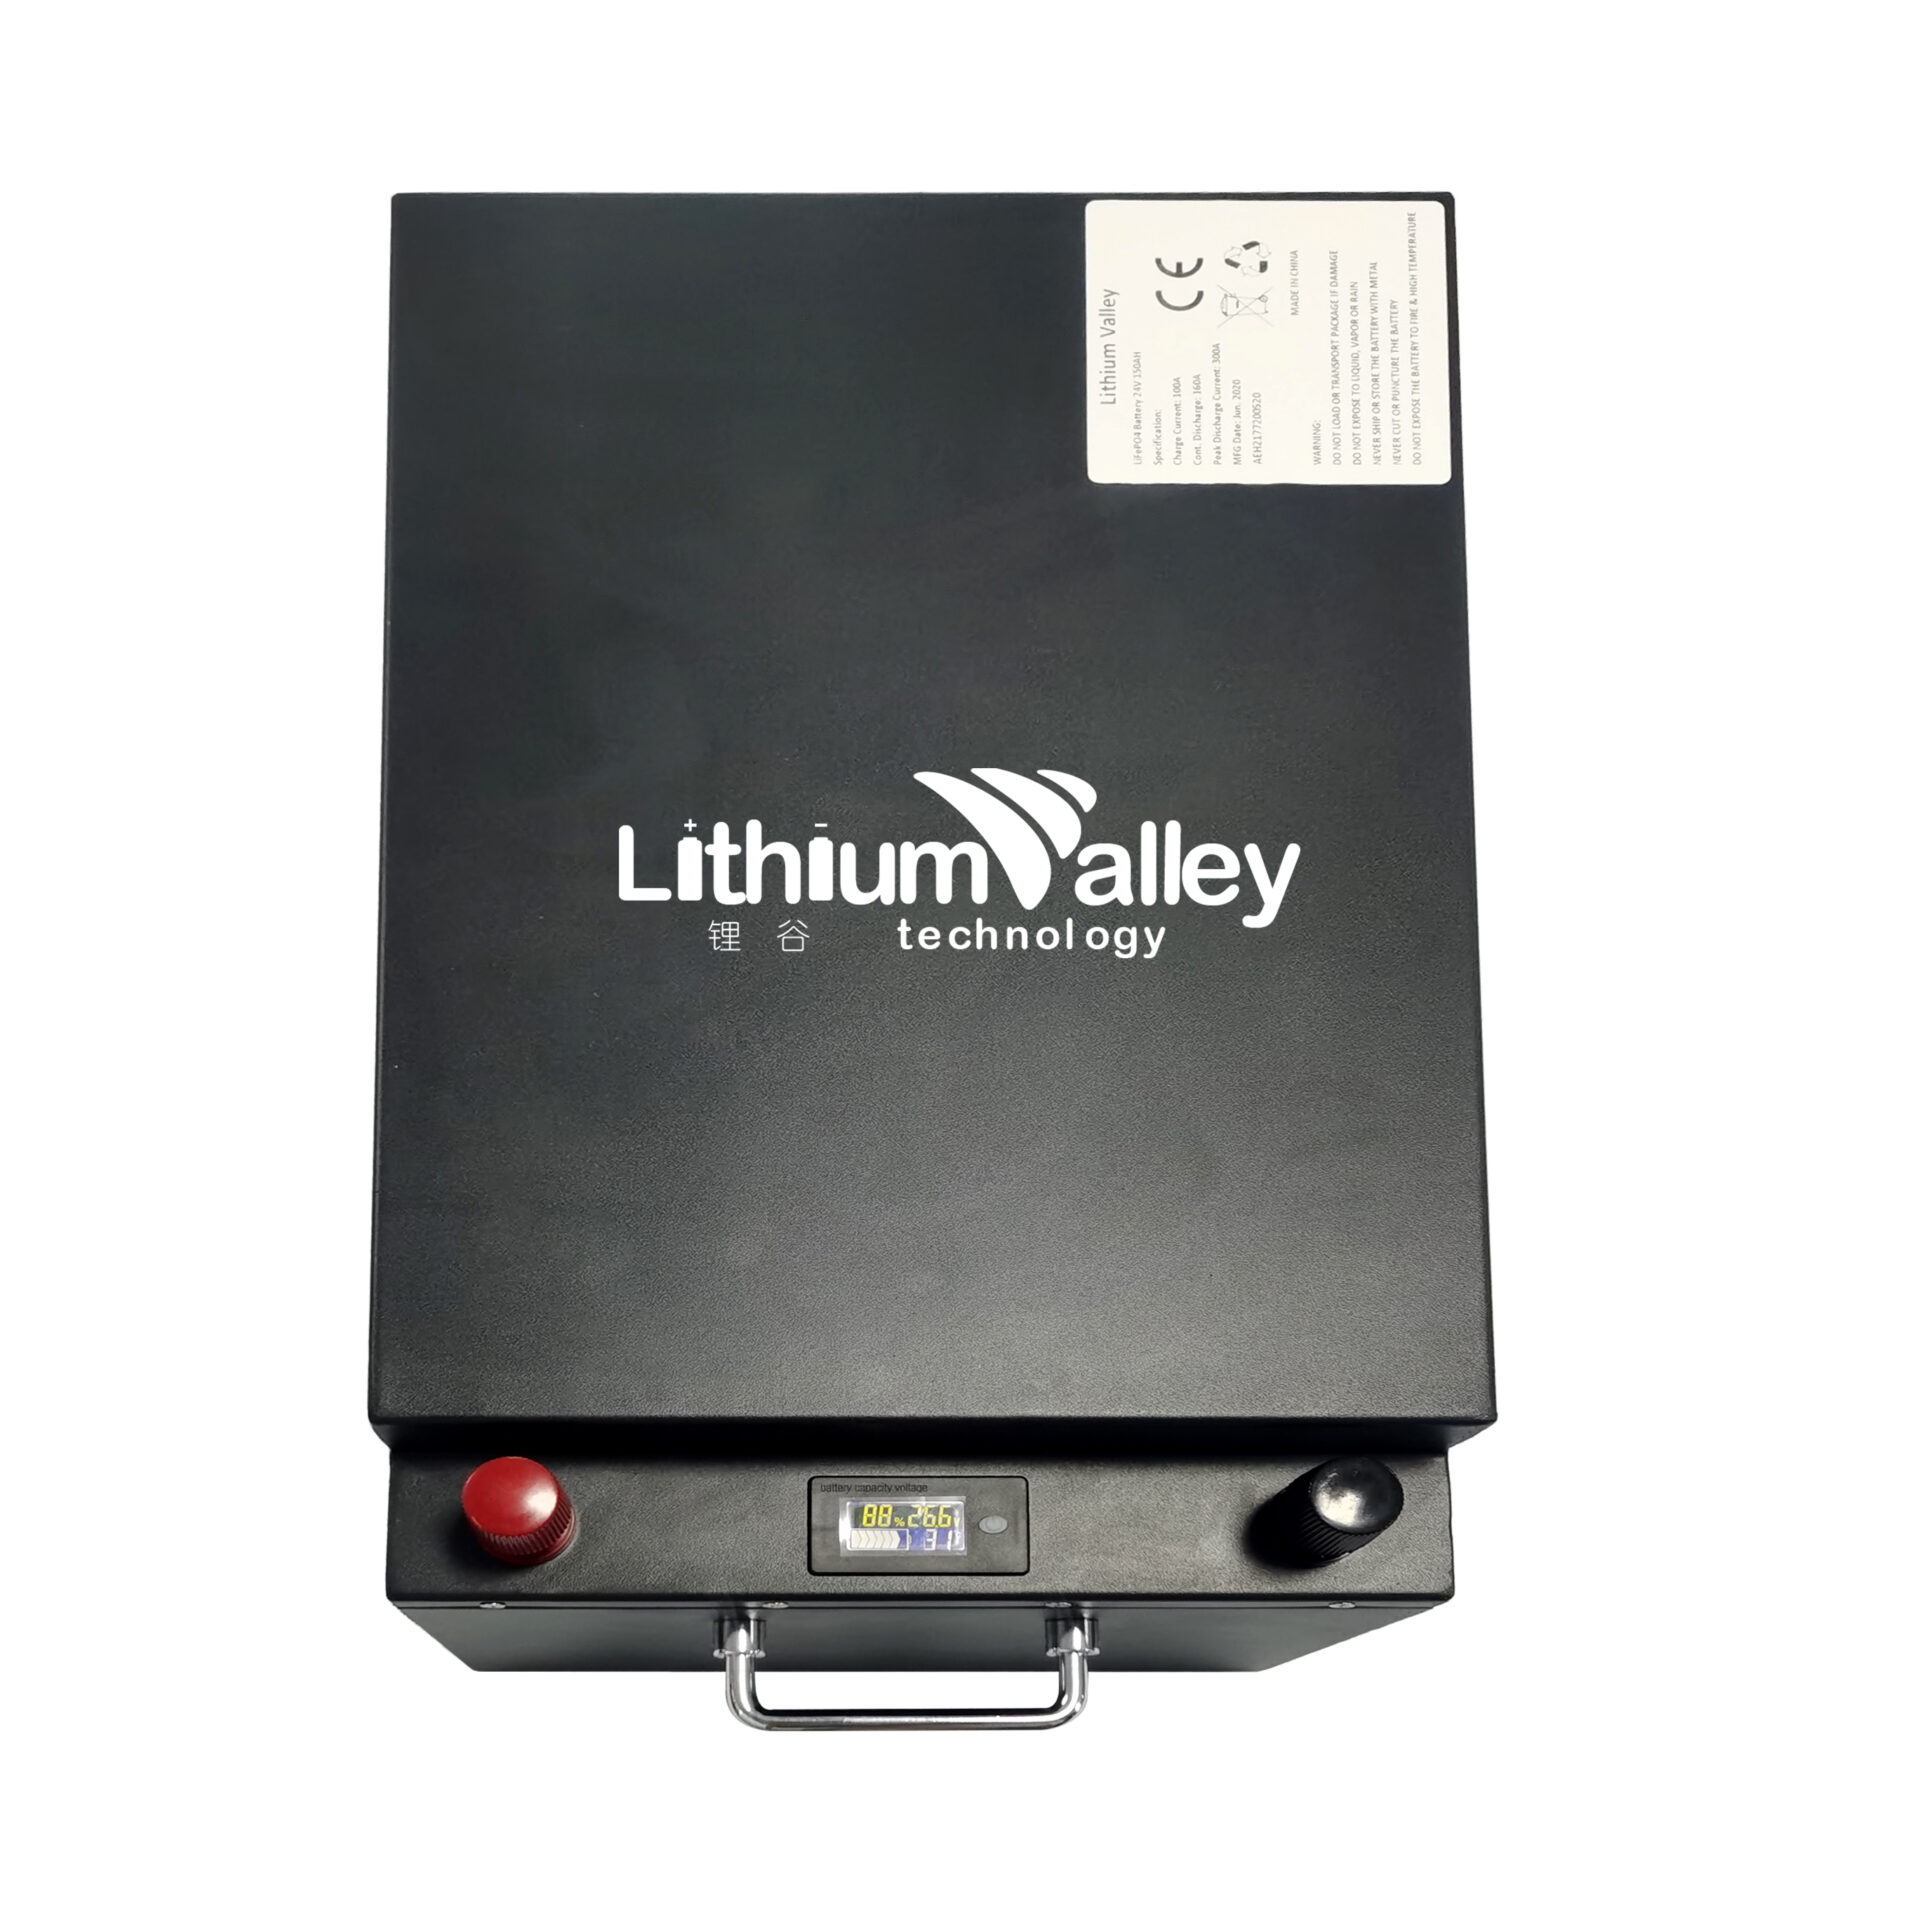 24V 150AH Lithium Ion Battery